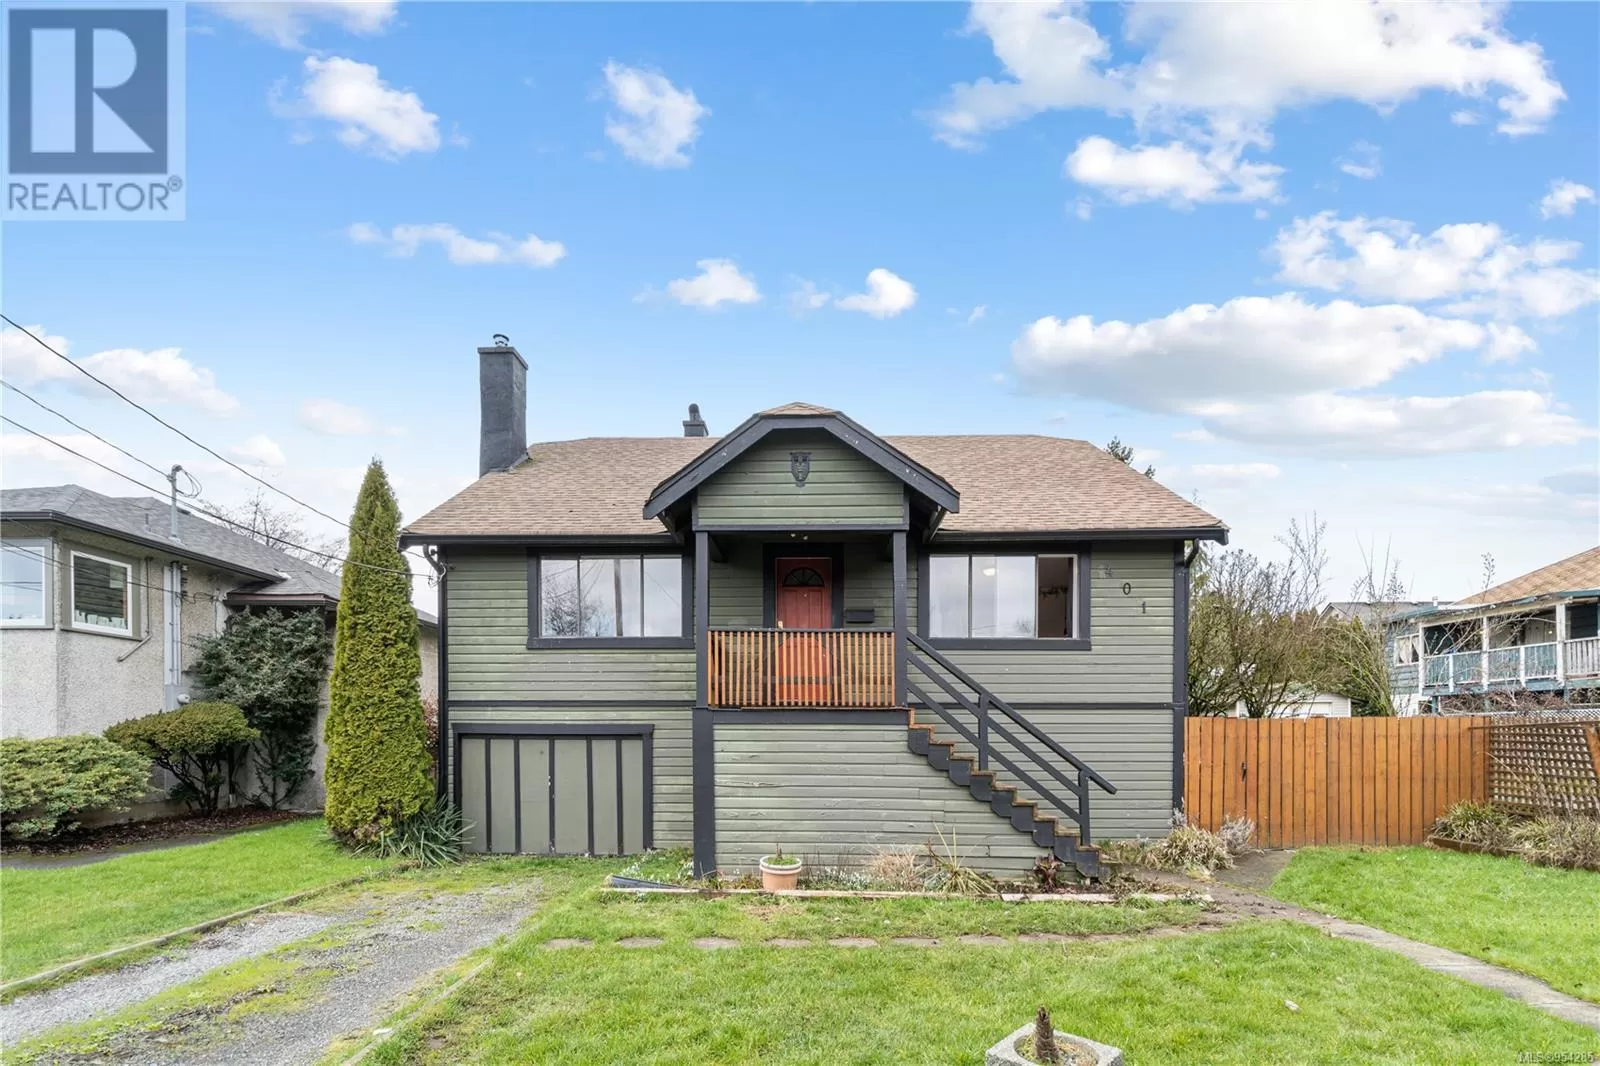 House for rent: 401 Hamilton Ave, Nanaimo, British Columbia V9R 4E7